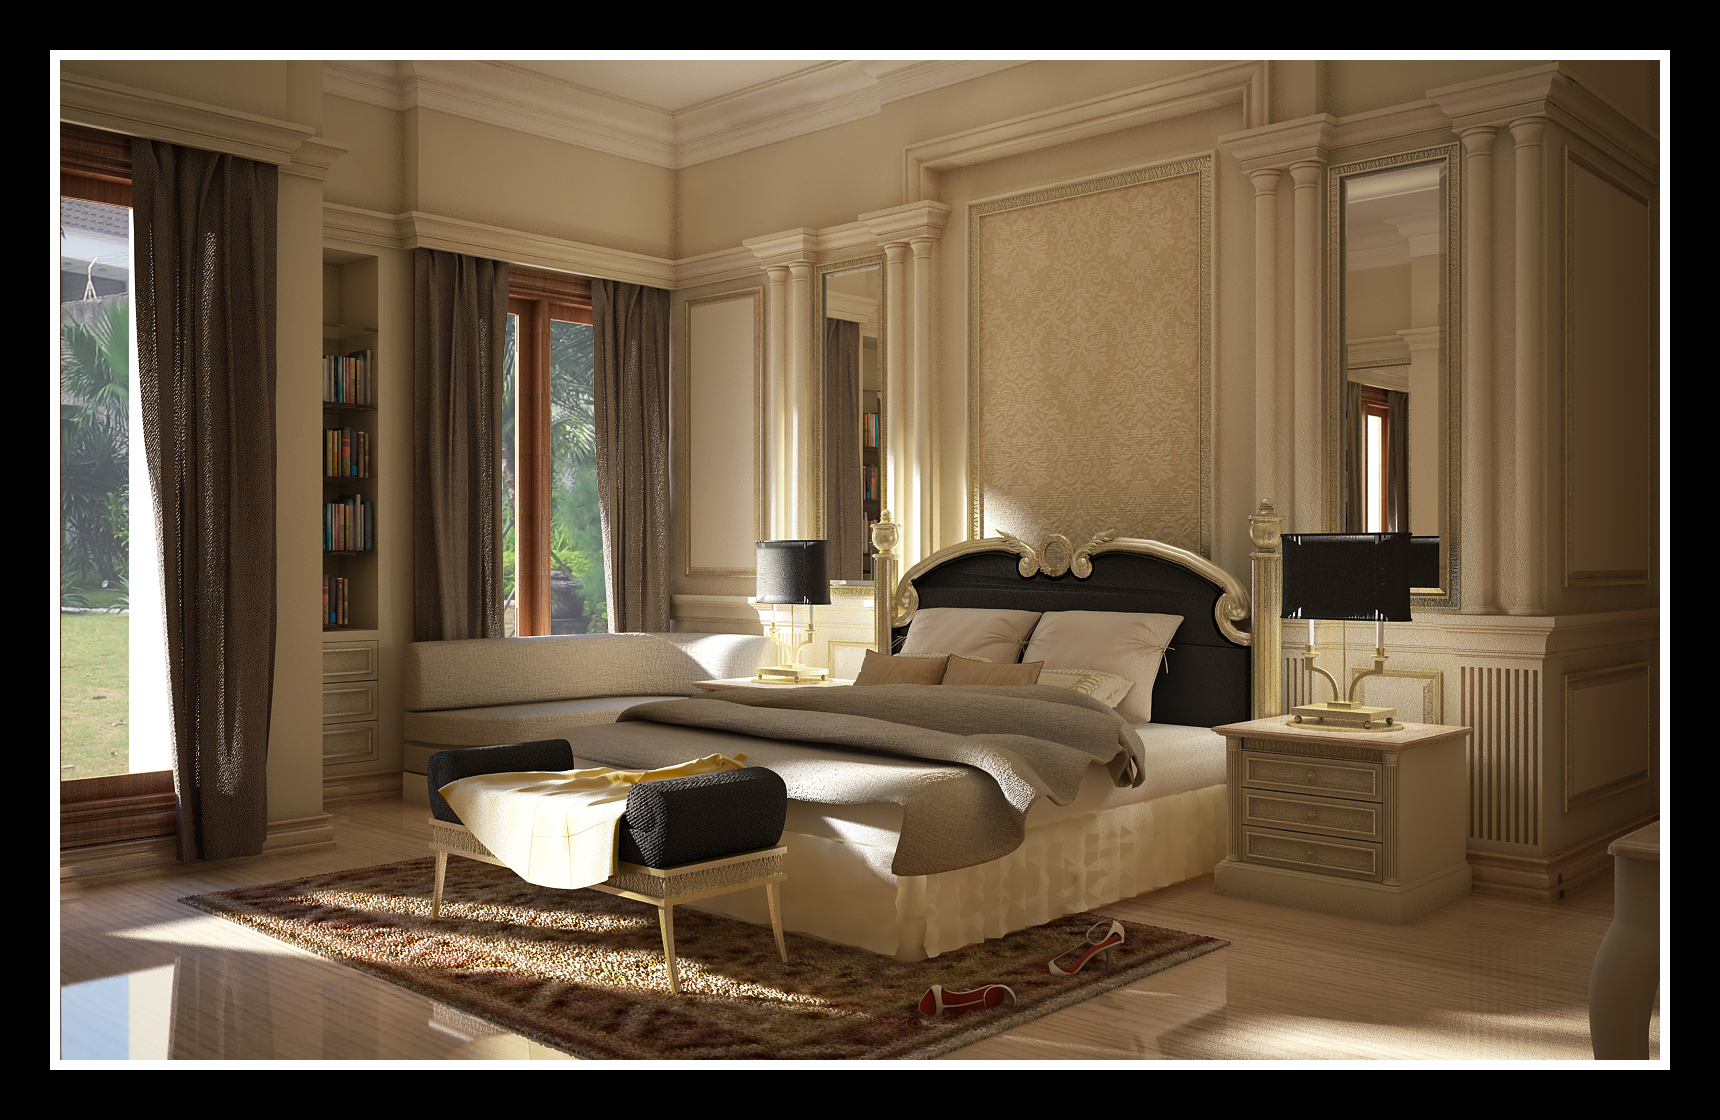 Classic Bedroom Design photo - 1